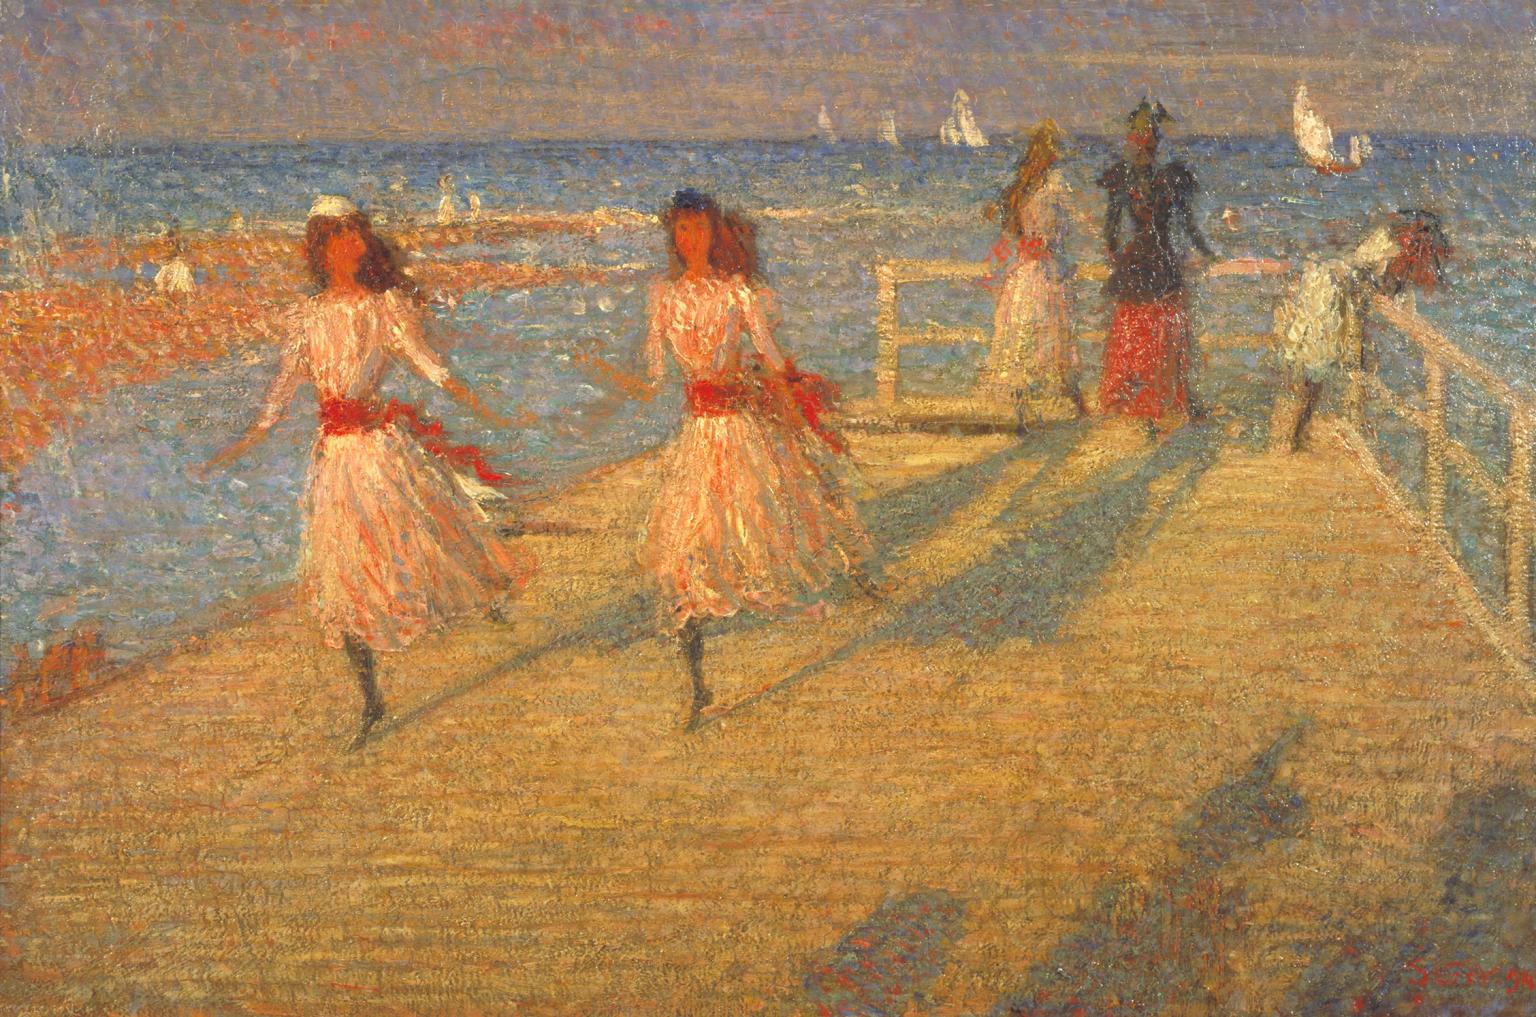 Impressionists dailyart Impressionists Philip Wilson Steer, Girls Running, Walberswick Pier, 1888-1894, Tate, London, UK.